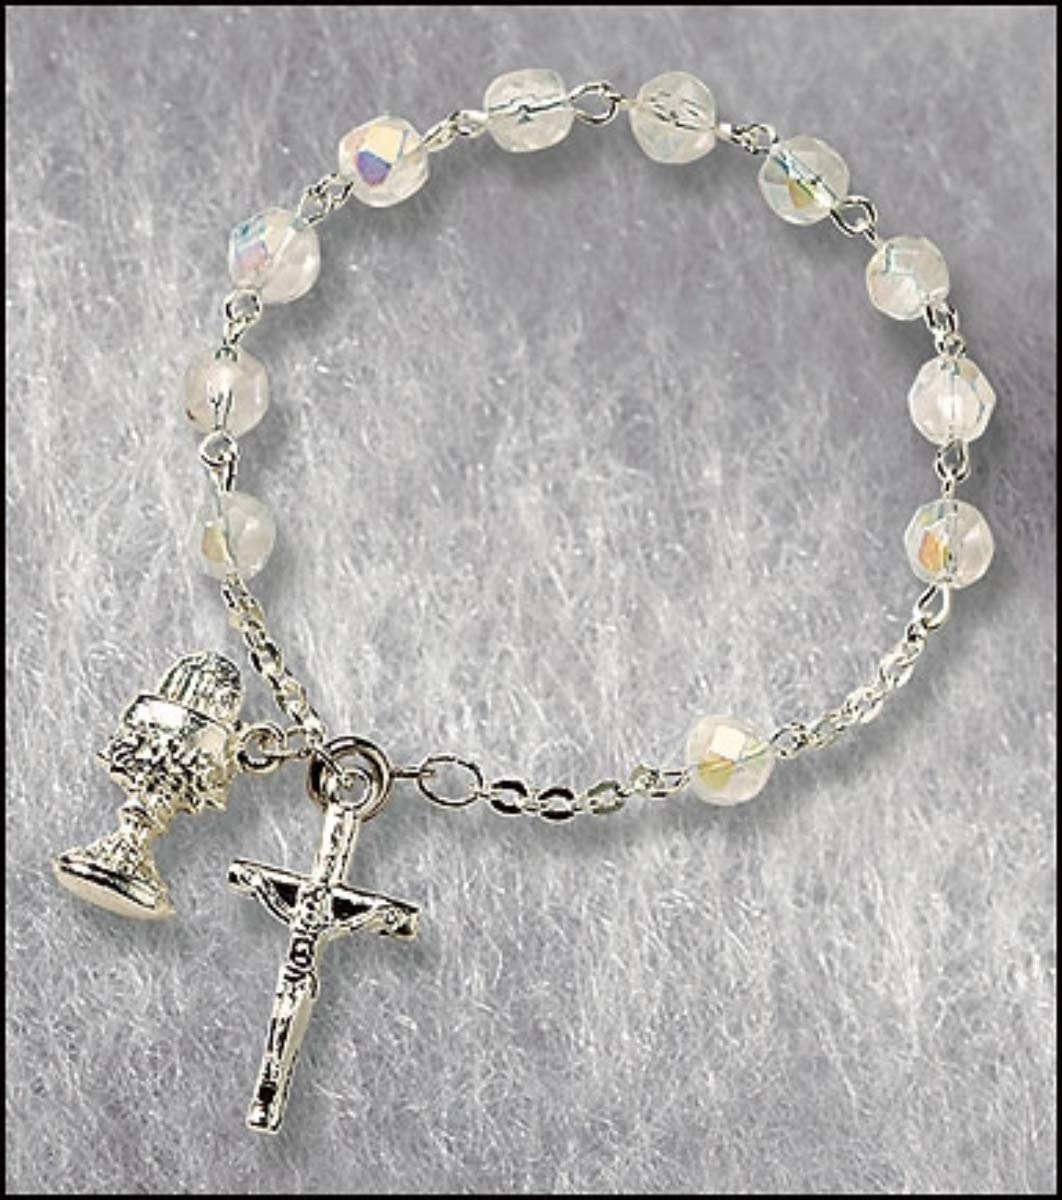 My First Communion Godparent Gift, Rosary Bracelet for Catholic Girls, Women, 7 Inch